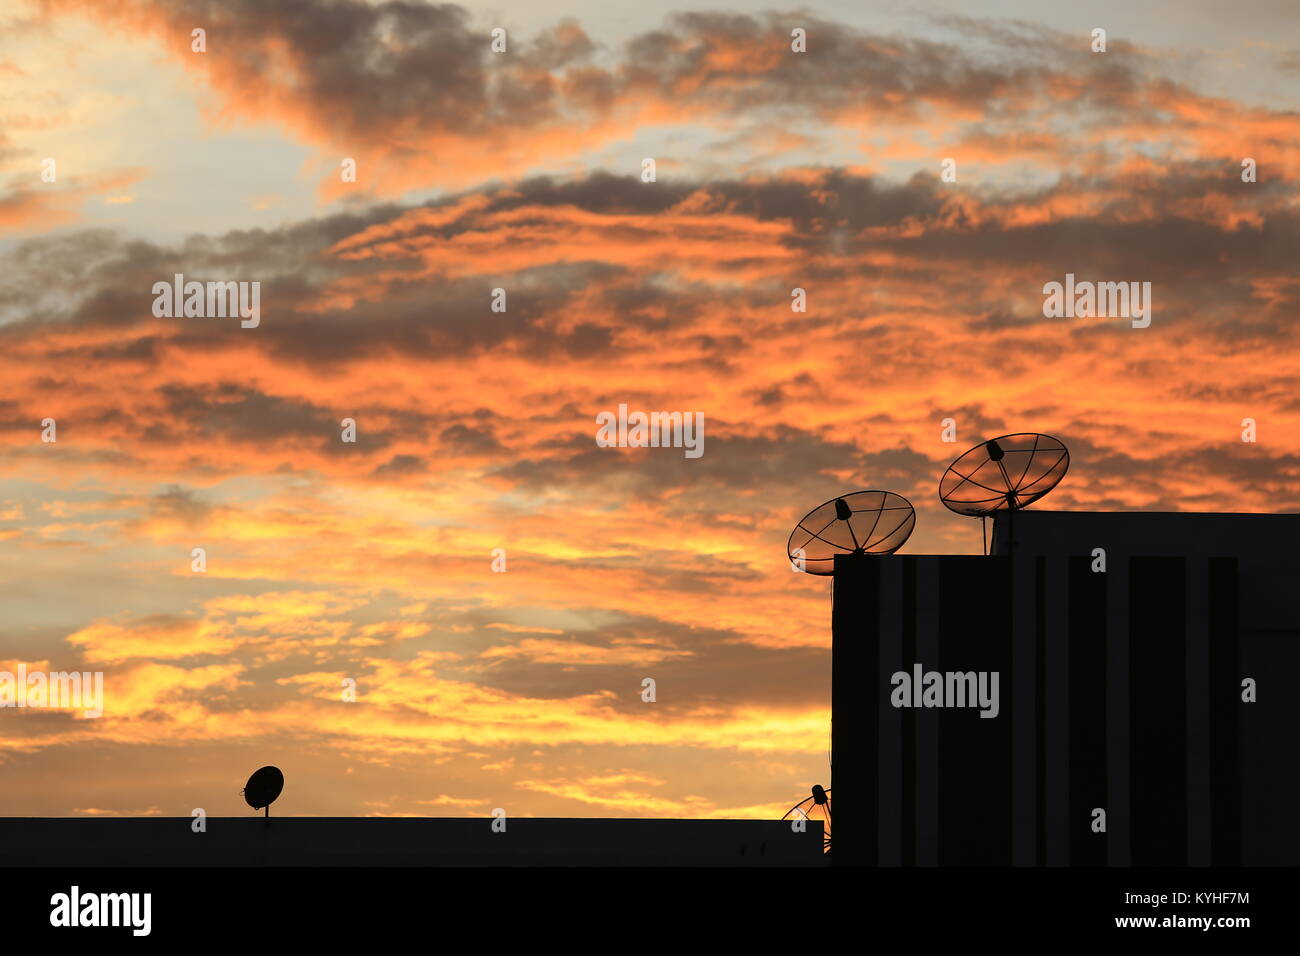 Satellite dish with evening sky. Stock Photo